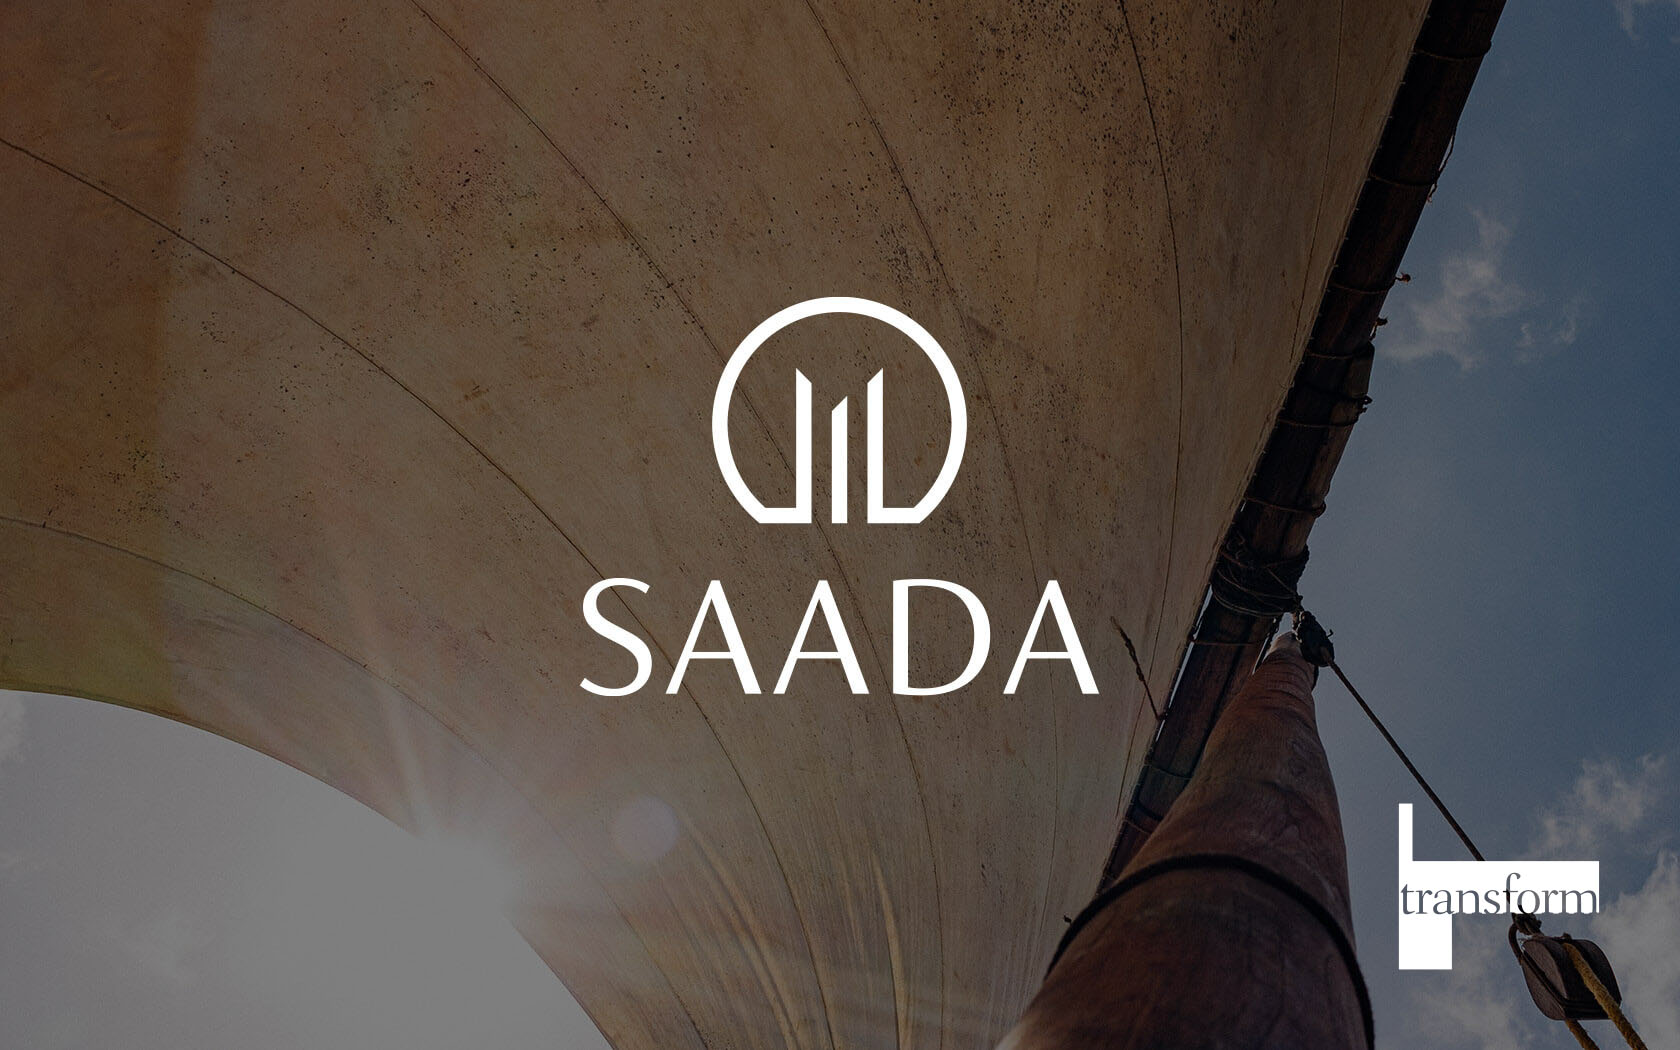 Saada. Brand logo in white